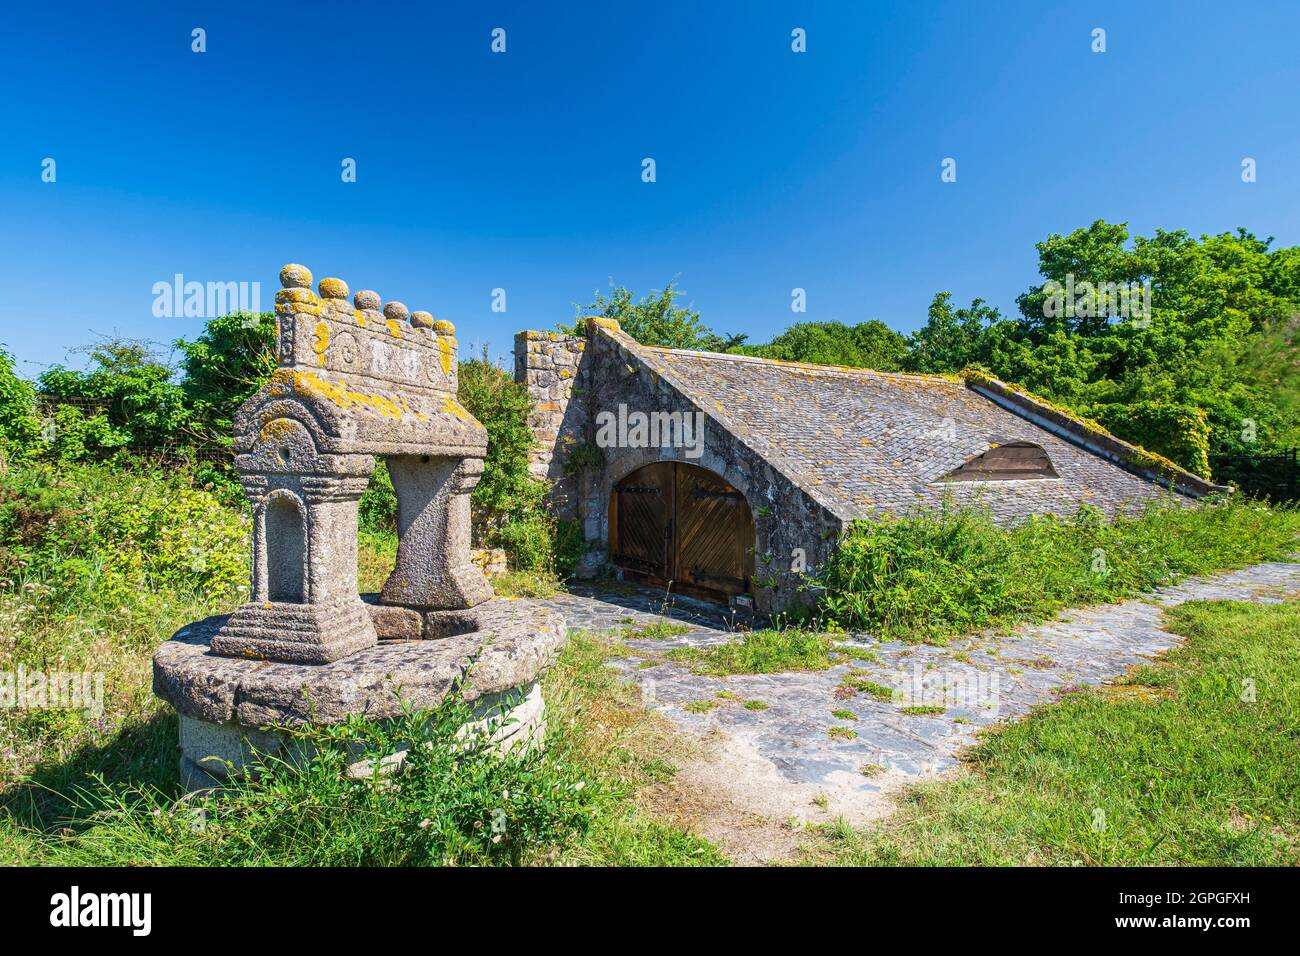 France, Cotes d'Armor, Saint-Jacut-de-la-Mer, Ruet well (1802) along the GR 34 hiking trail or customs trail Stock Photo